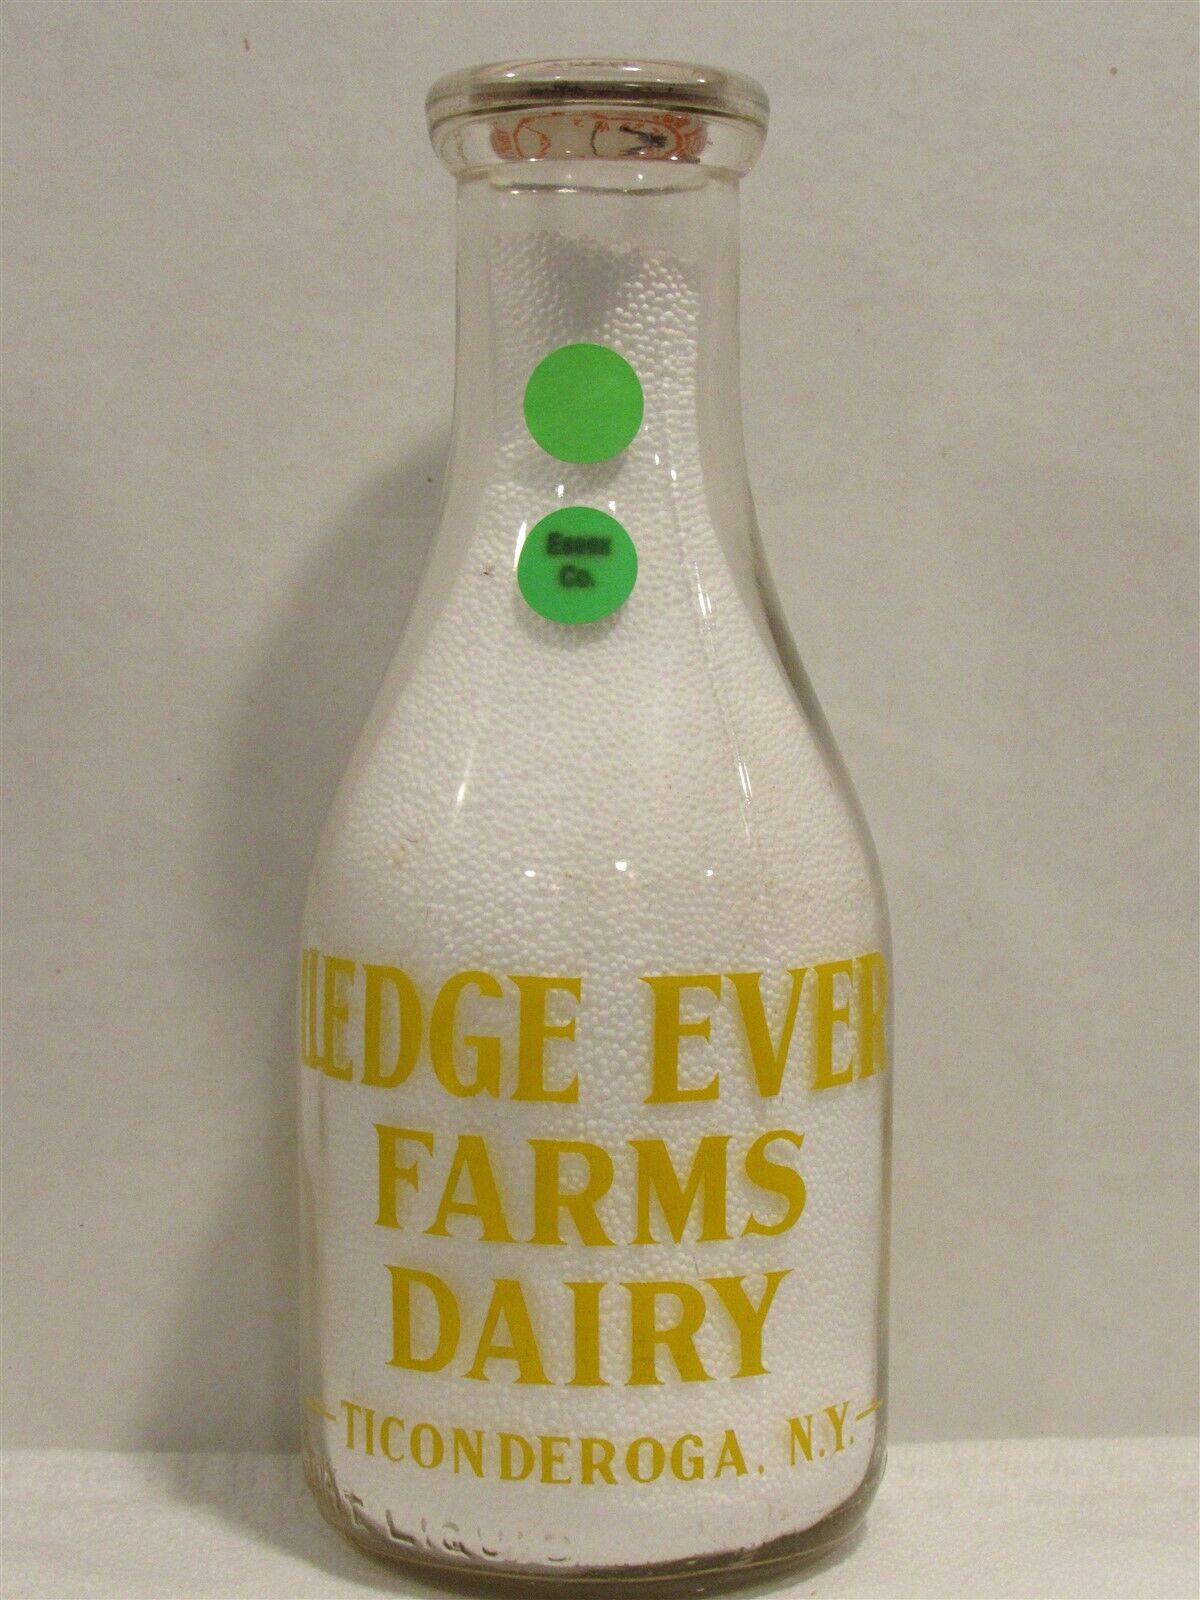 TRPQ Milk Bottle Ledge Ever Farms Dairy Farm Ticonderoga NY ESSEX COUNTY 1951